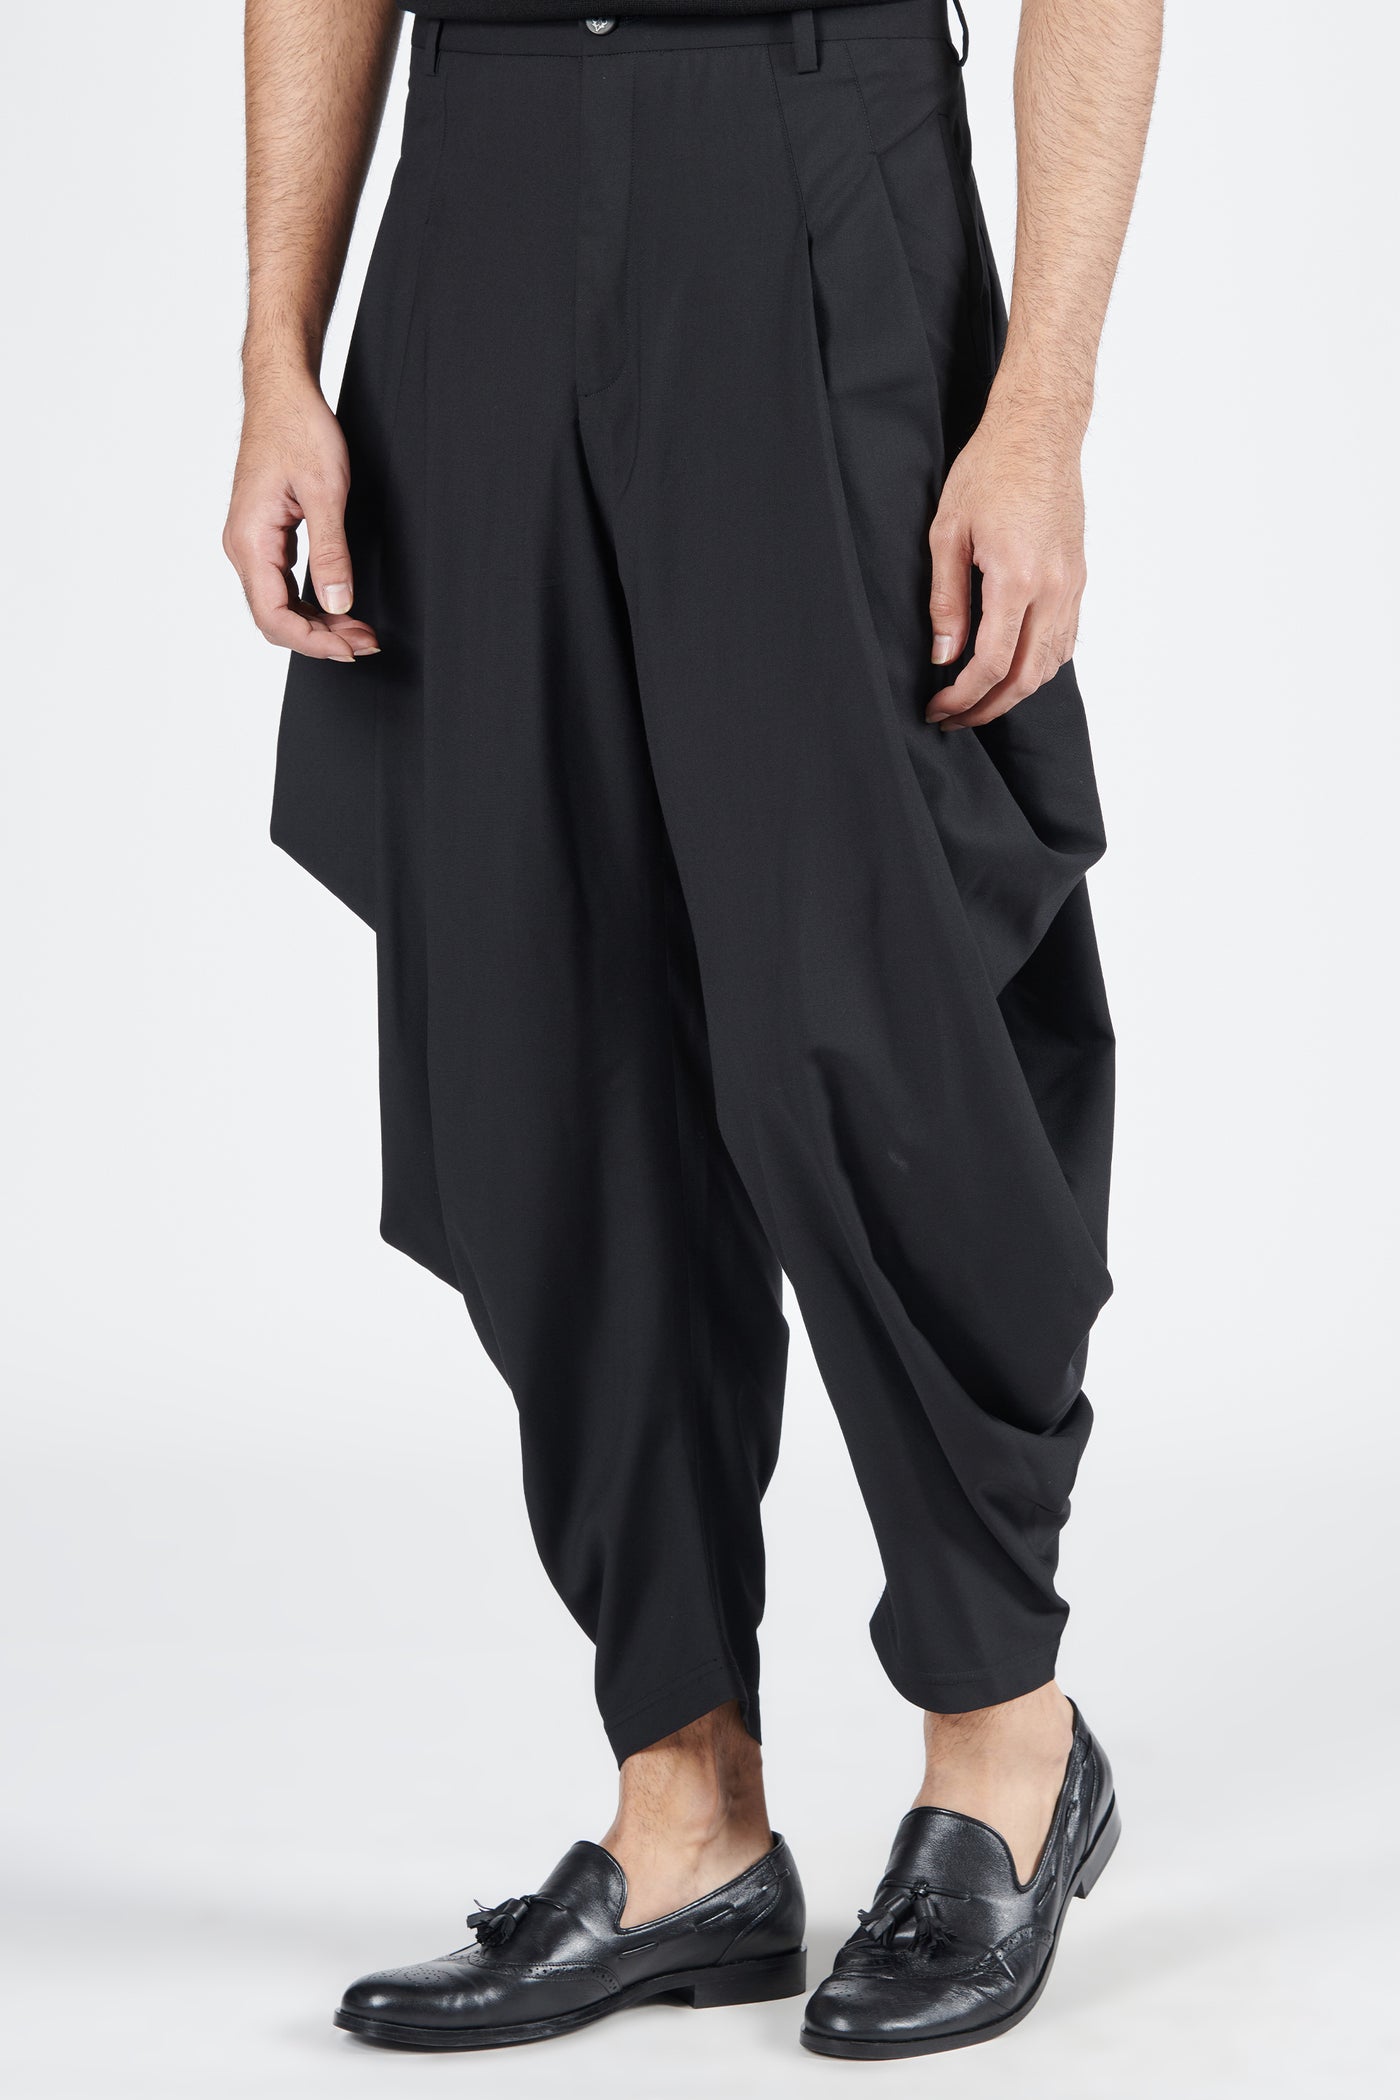 Shantanu & Nikhil Black Drape Cowl Pants indian designer wear online shopping melange singapore